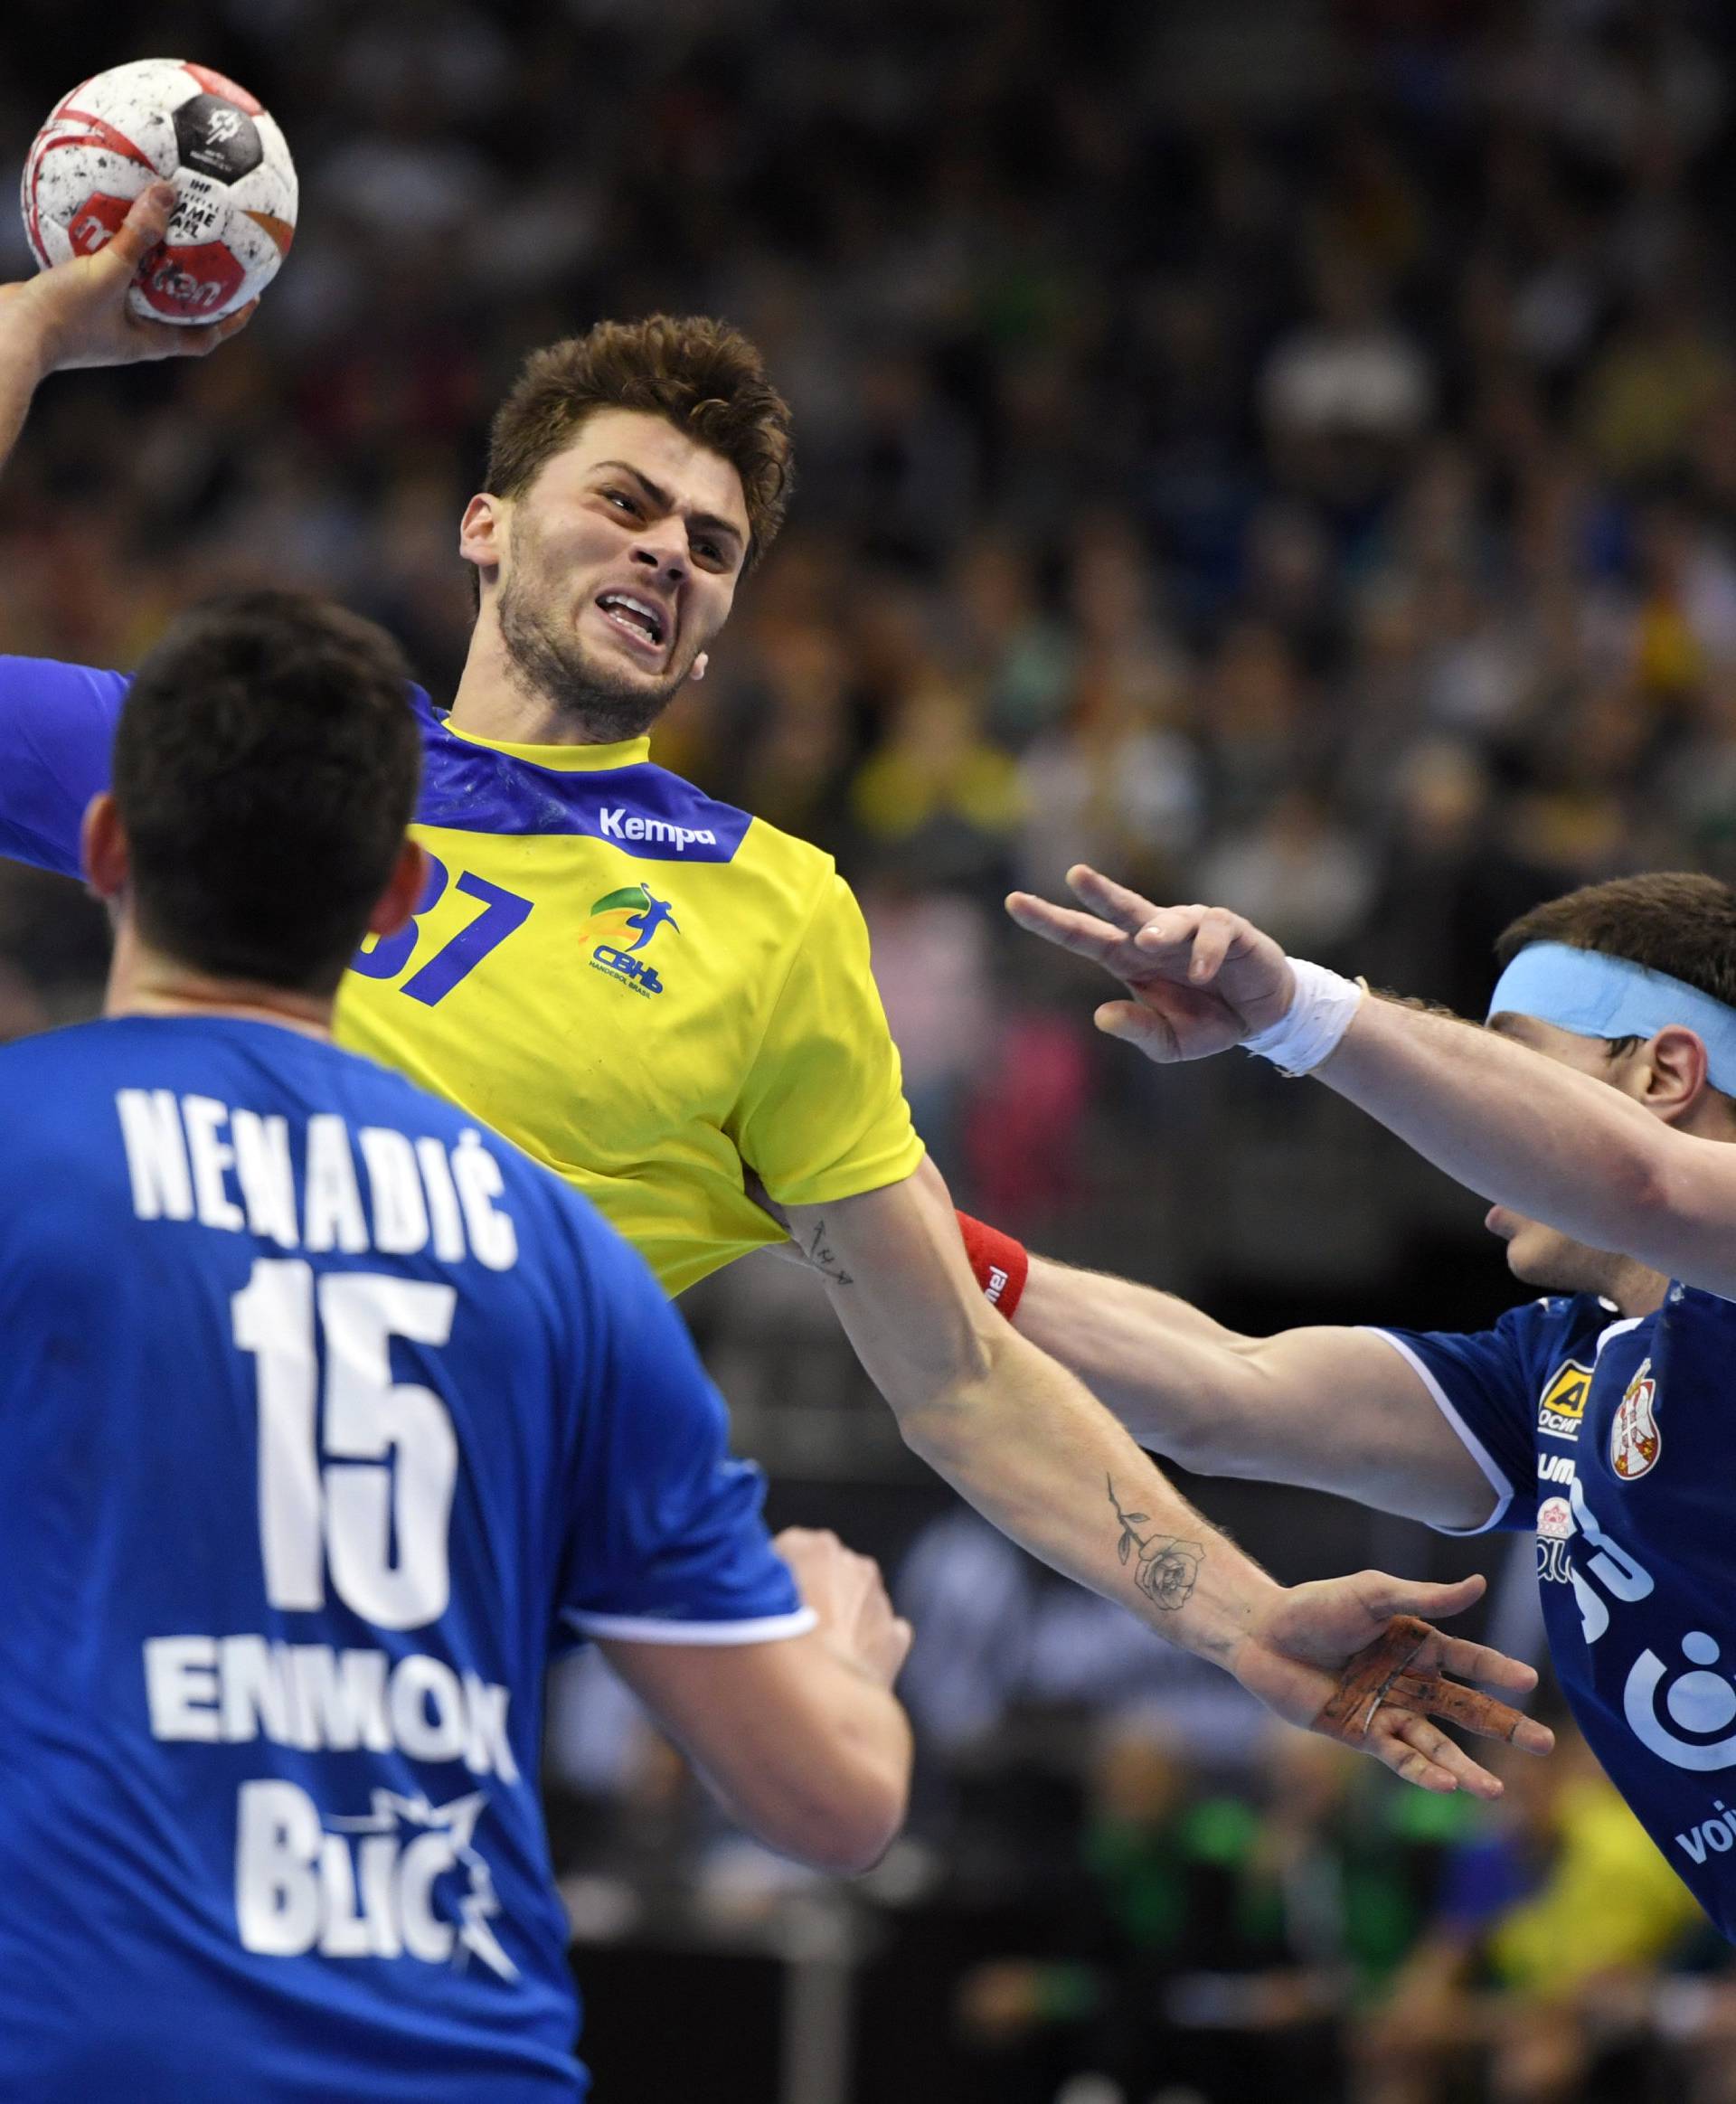 IHF Handball World Championship - Germany & Denmark 2019 - Group A - Serbia v Brazil